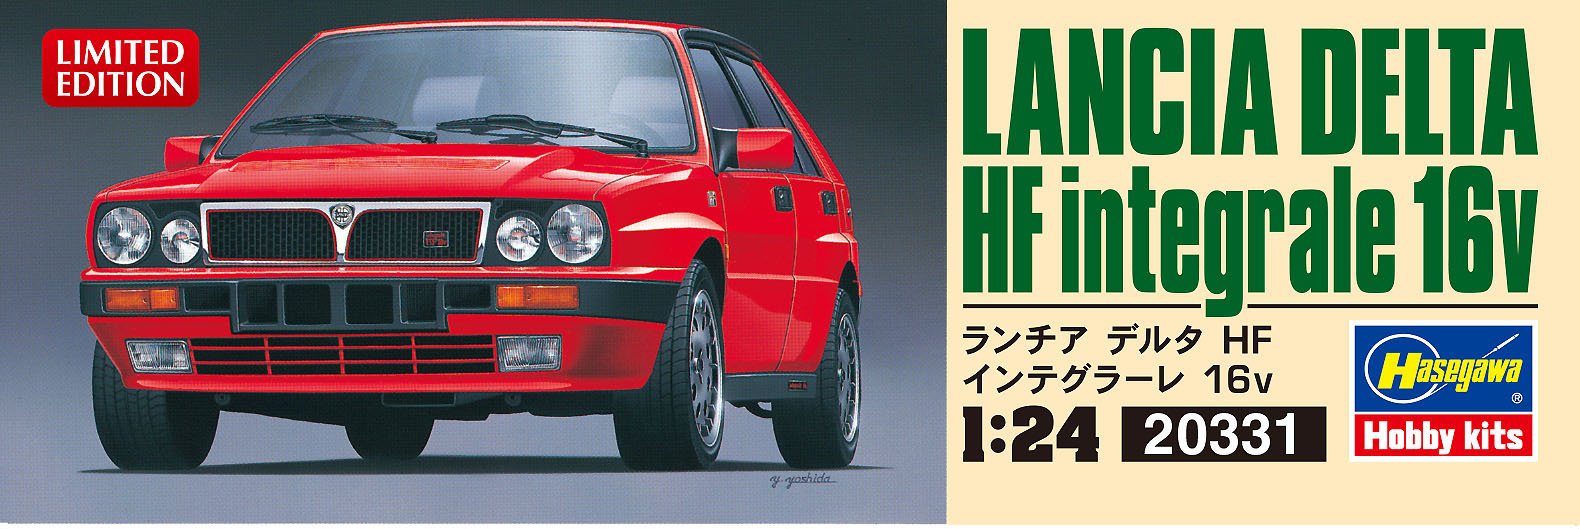 Hasegawa 20331 Lancia Delta Hf Integrale 16V 1/24 Japanese Plastic Model Kit